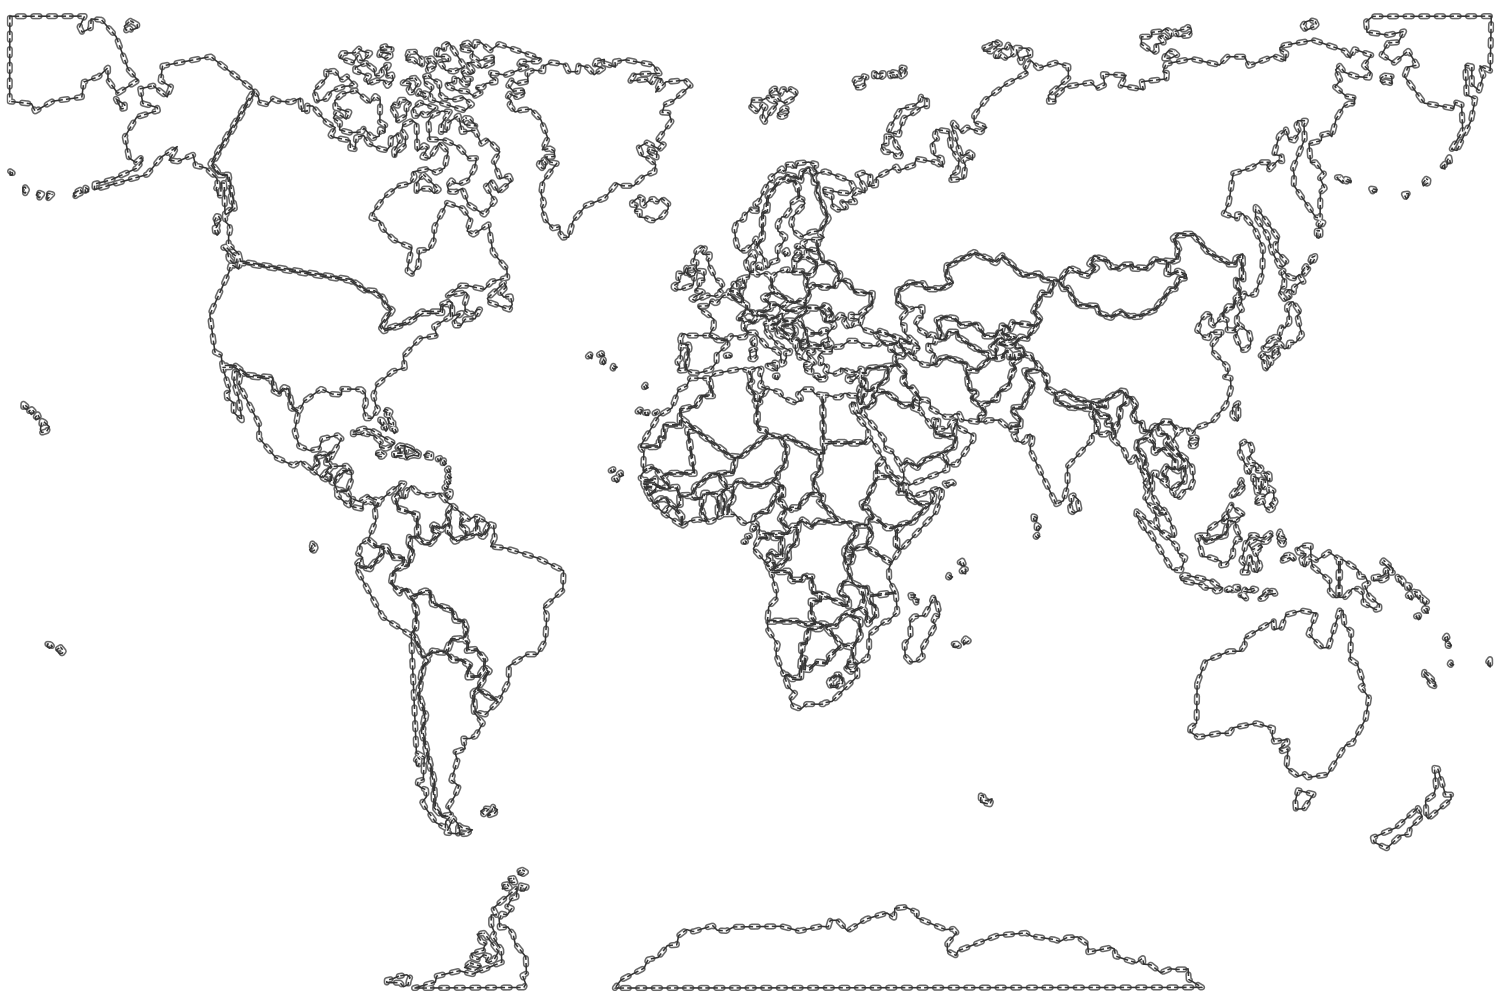 maps clipart world atlas